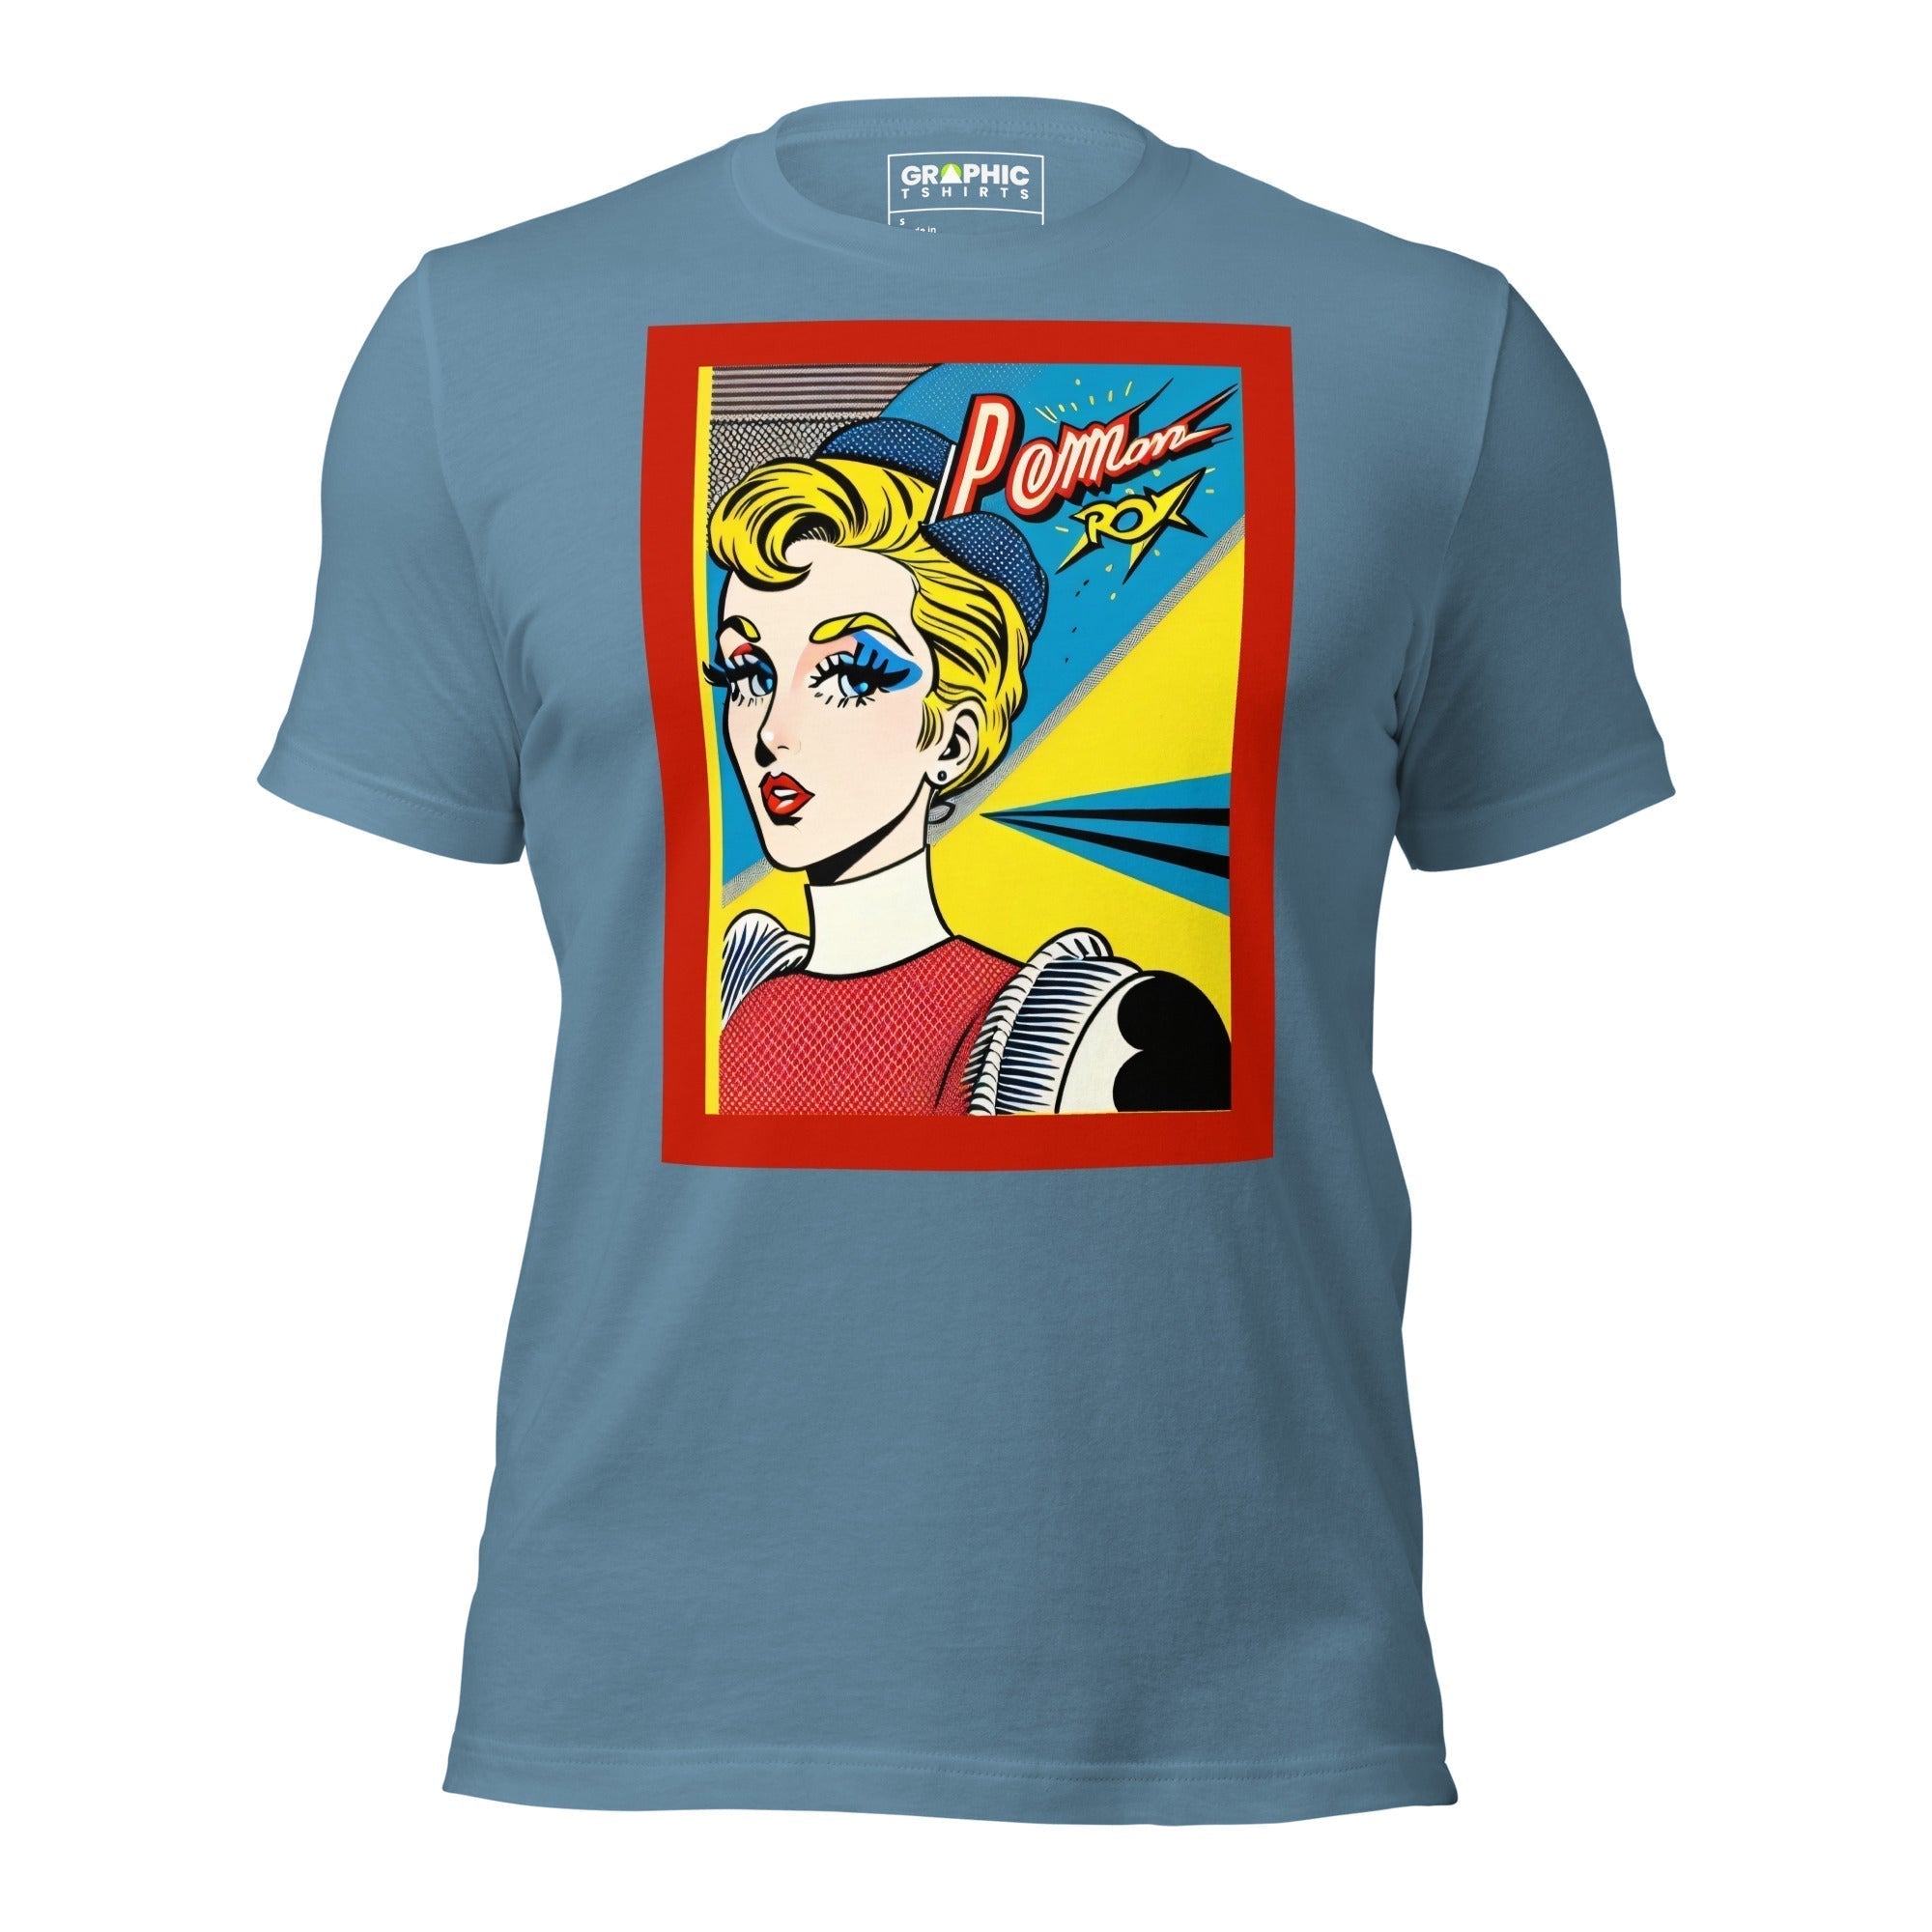 Unisex Crew Neck T-Shirt - Vintage American Comic Series v.25 - GRAPHIC T-SHIRTS